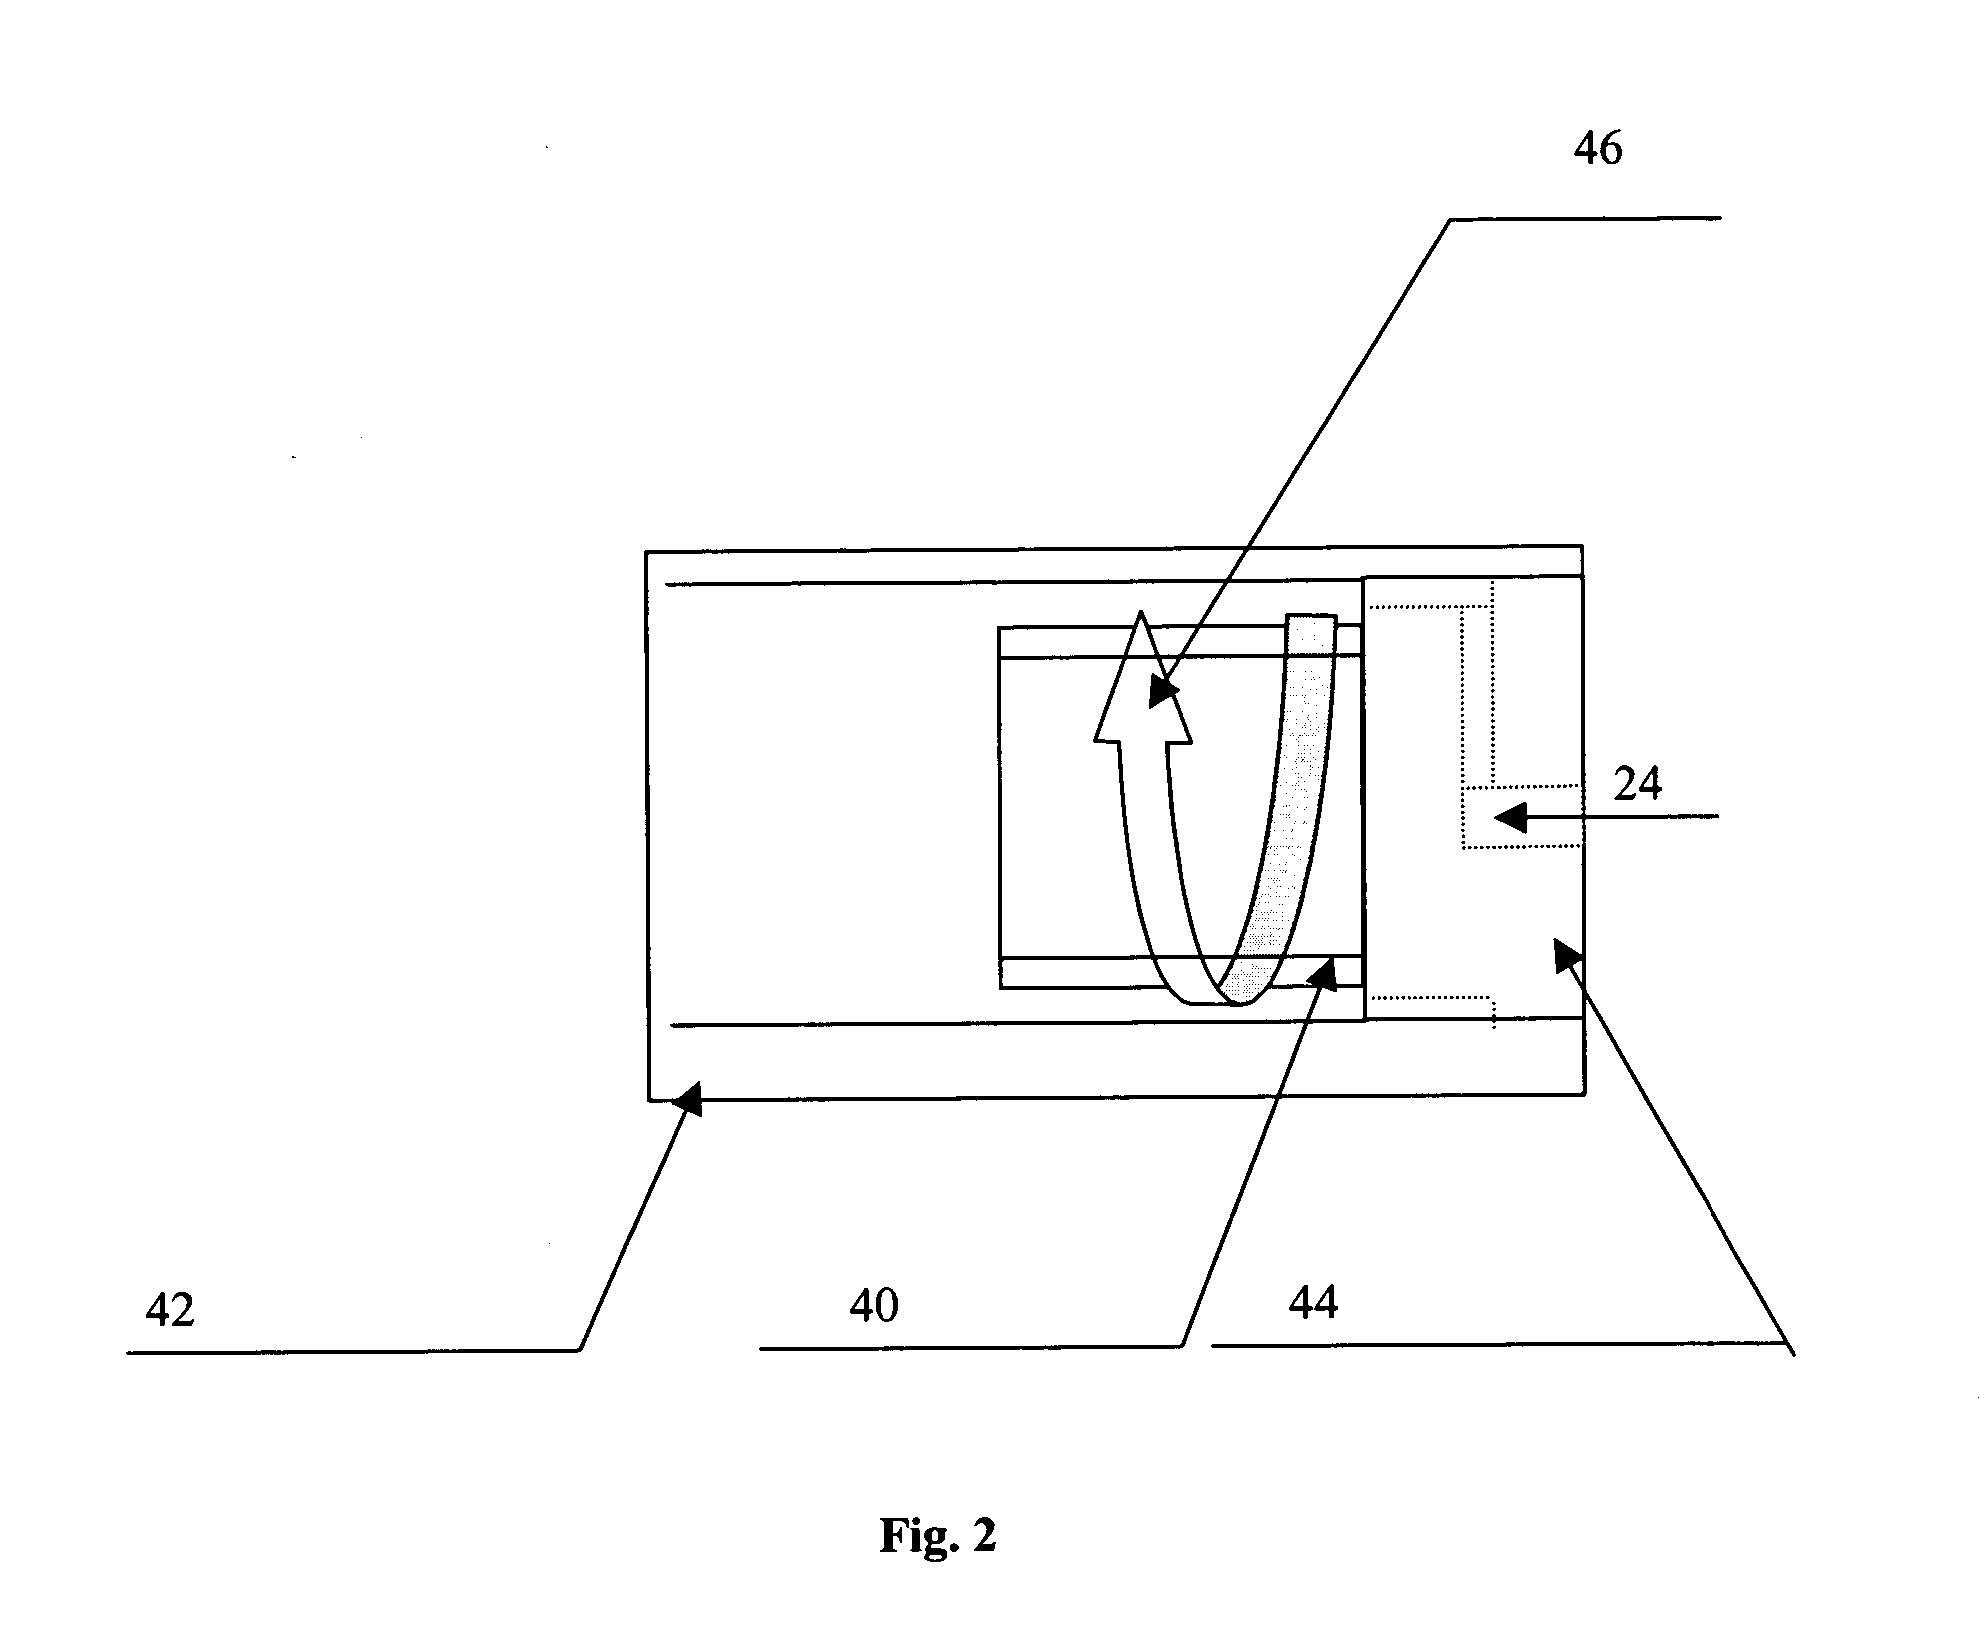 Ring plasma jet method and apparatus for making an optical fiber preform